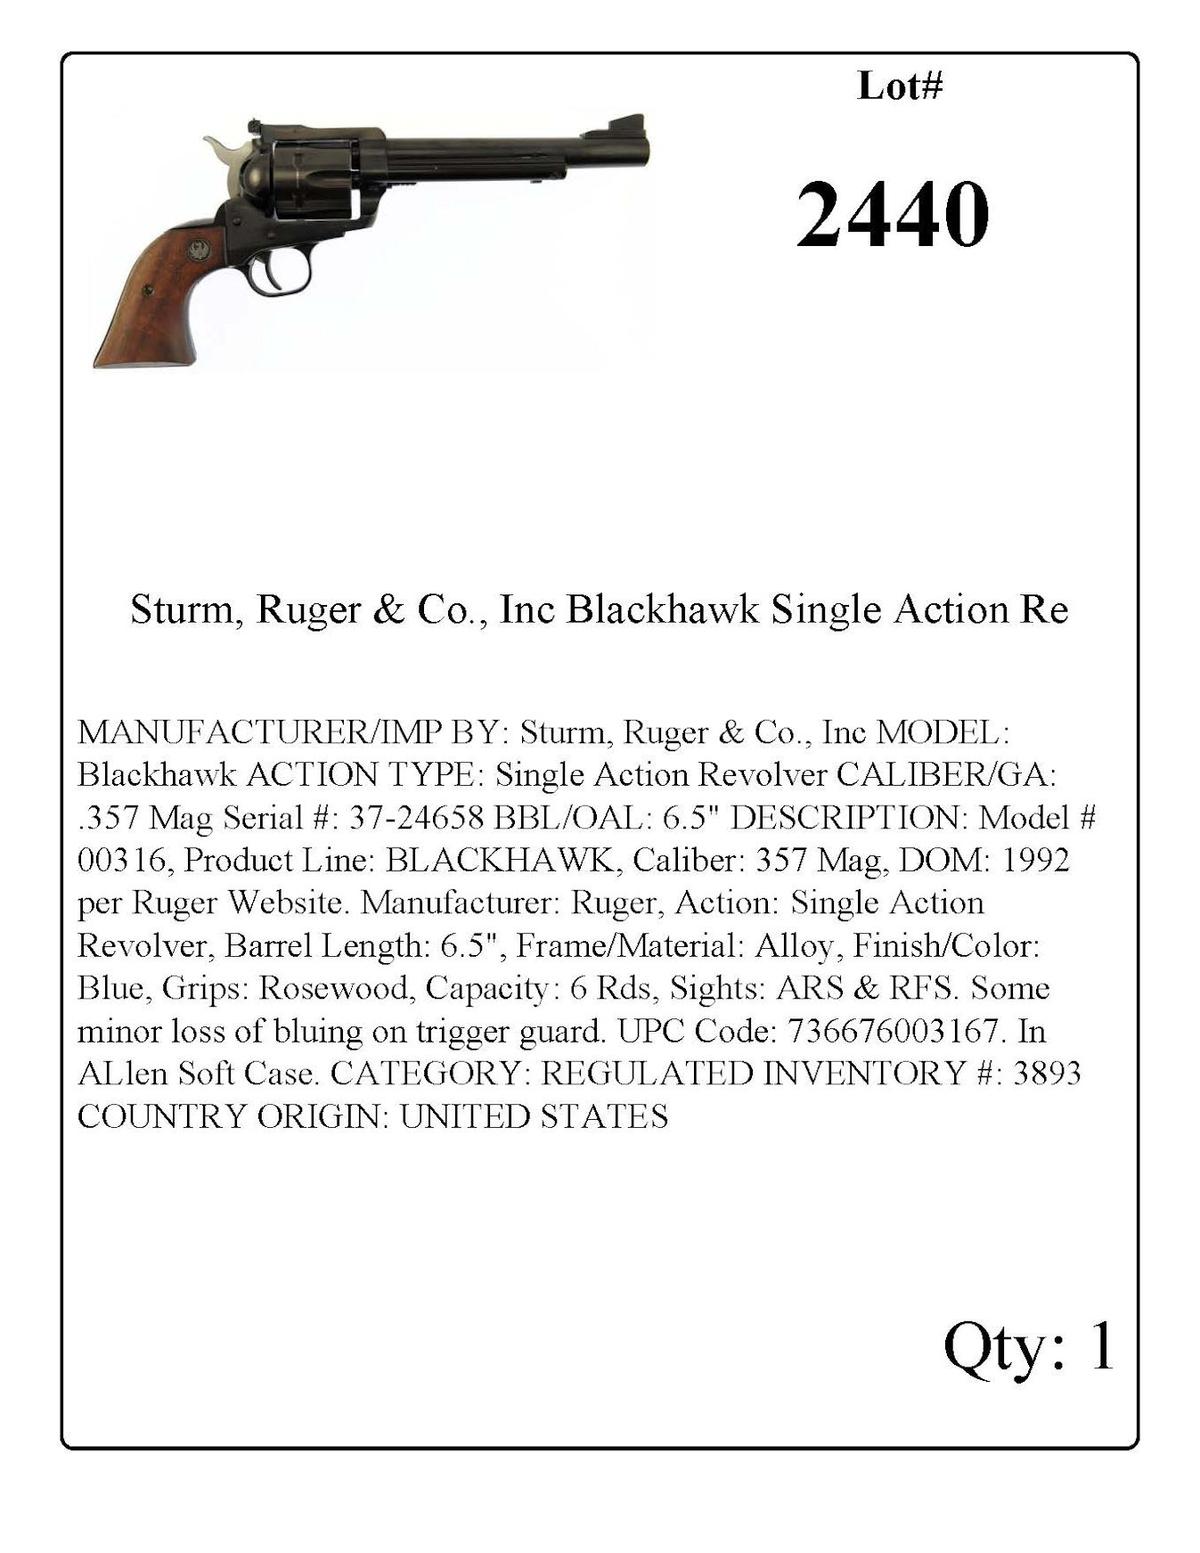 Sturm, Ruger & Co., Inc Blackhawk Single Action Revolver